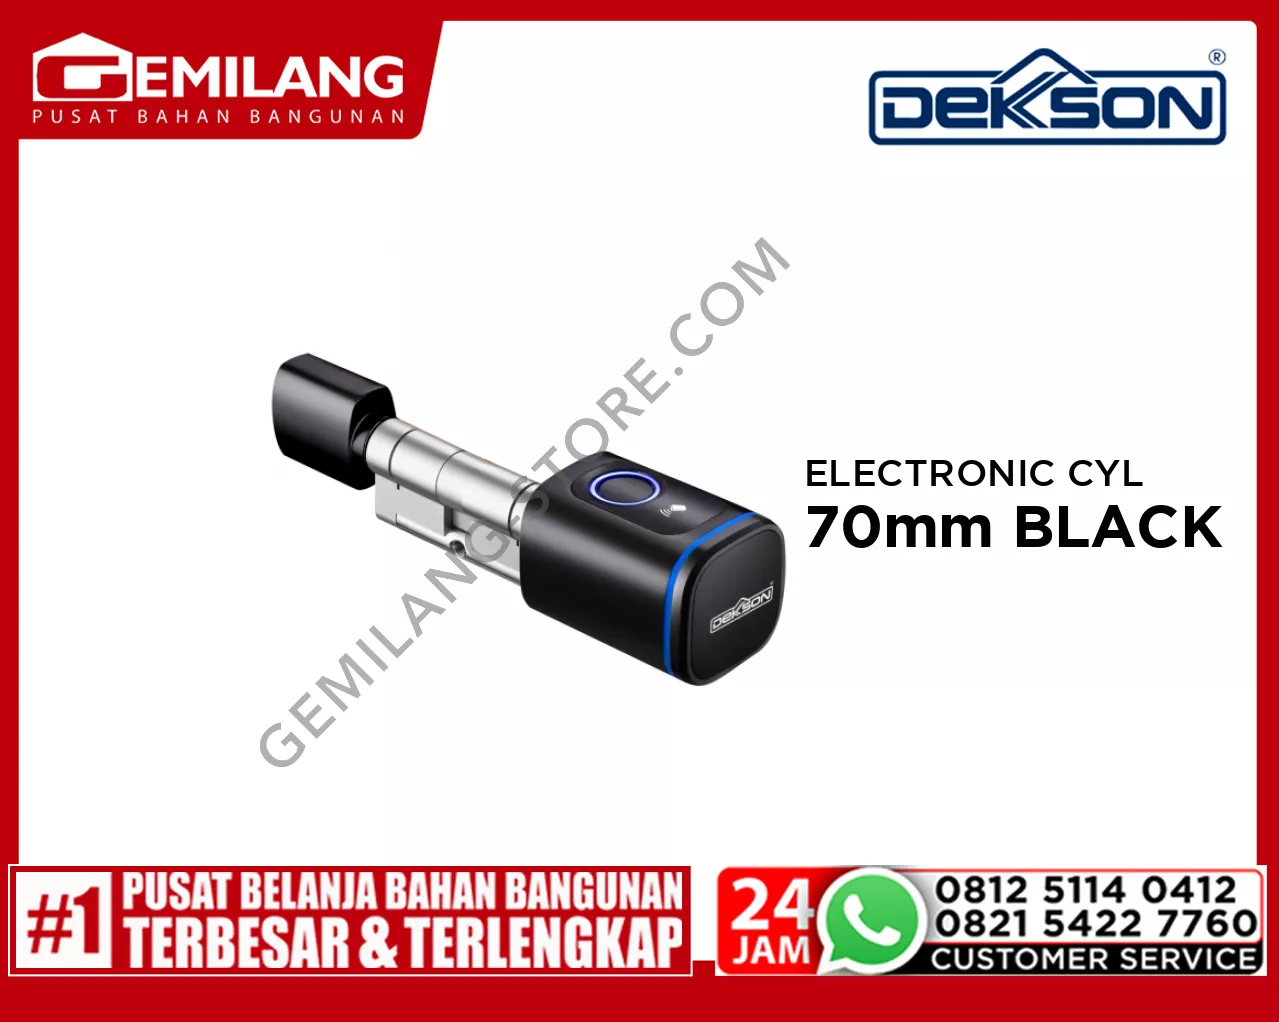 DEKKSON ELECTRONIC CYLINDER EC D01 70mm BLACK